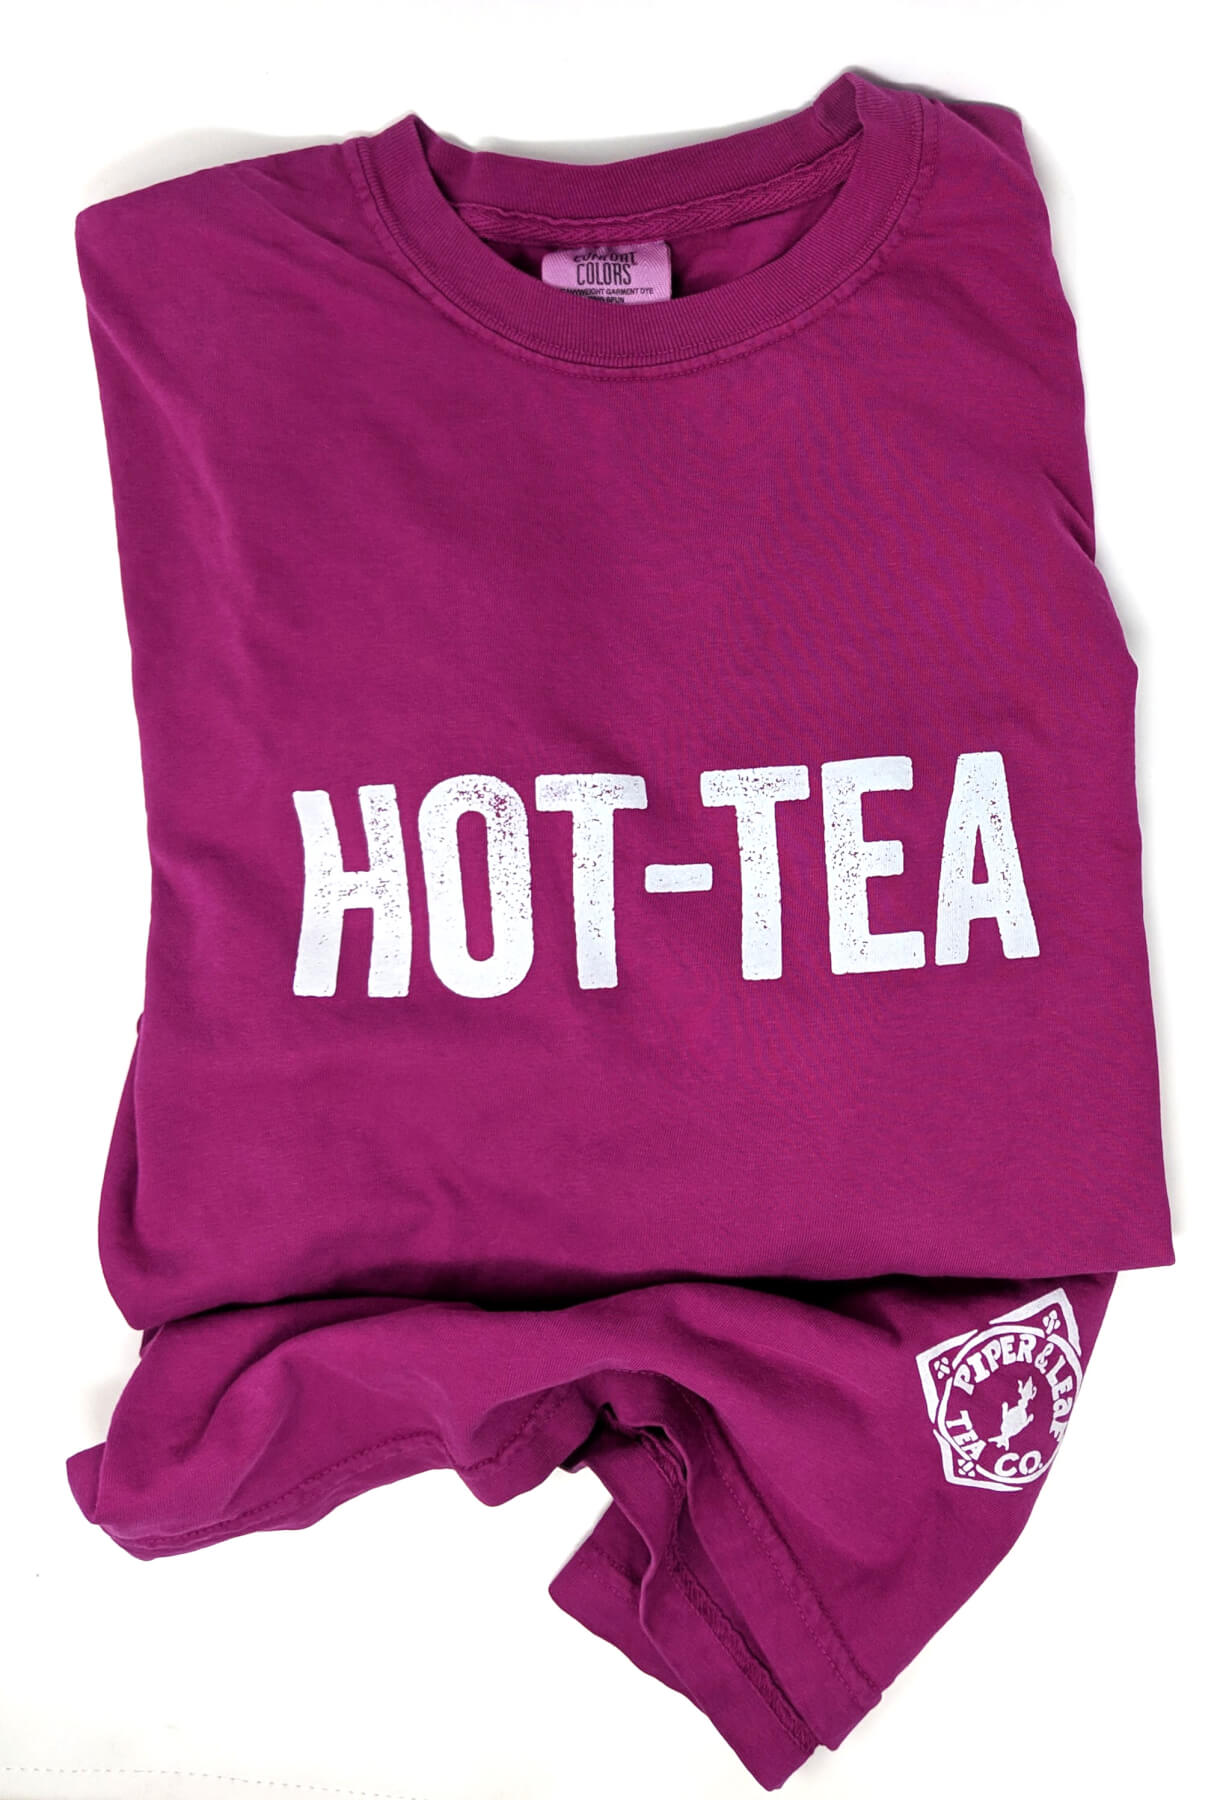 Piper & Leaf long sleeve "HOT-TEA" shirt - boysenberry color